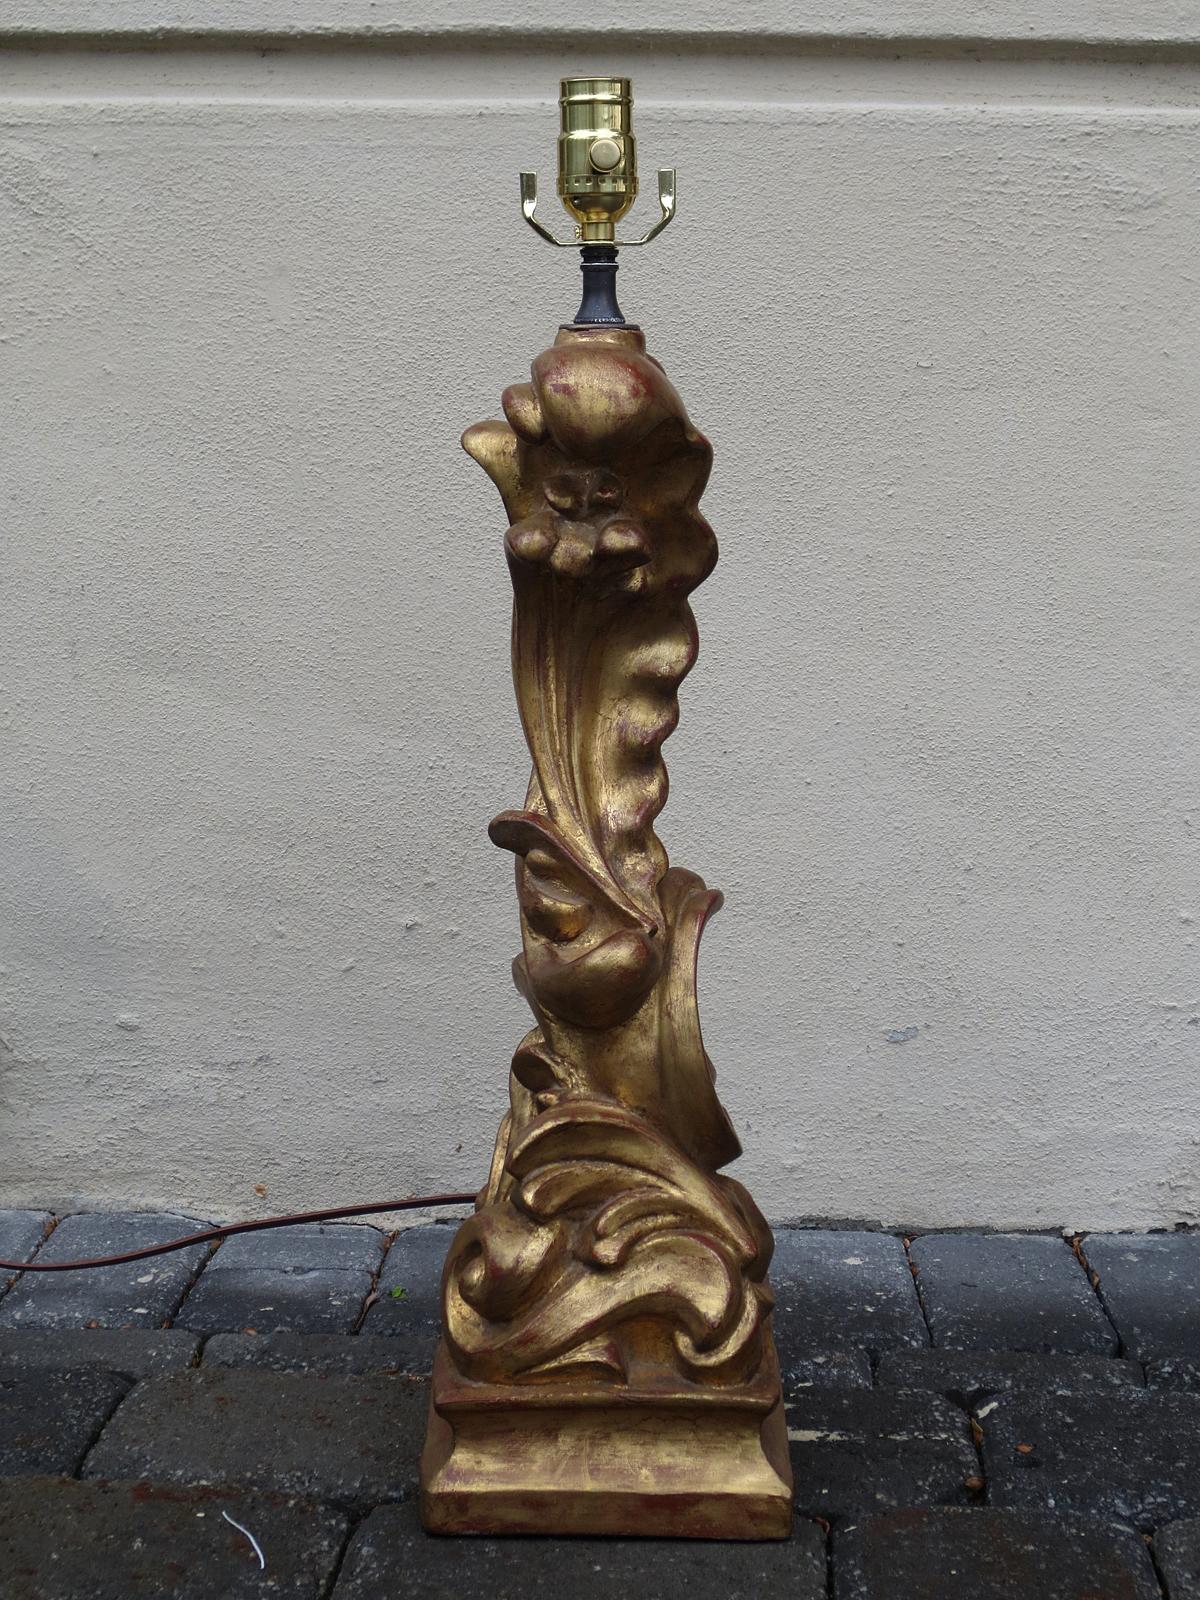 Mid-20th century Hollywood Regency style custom gilded lamp
New wiring.